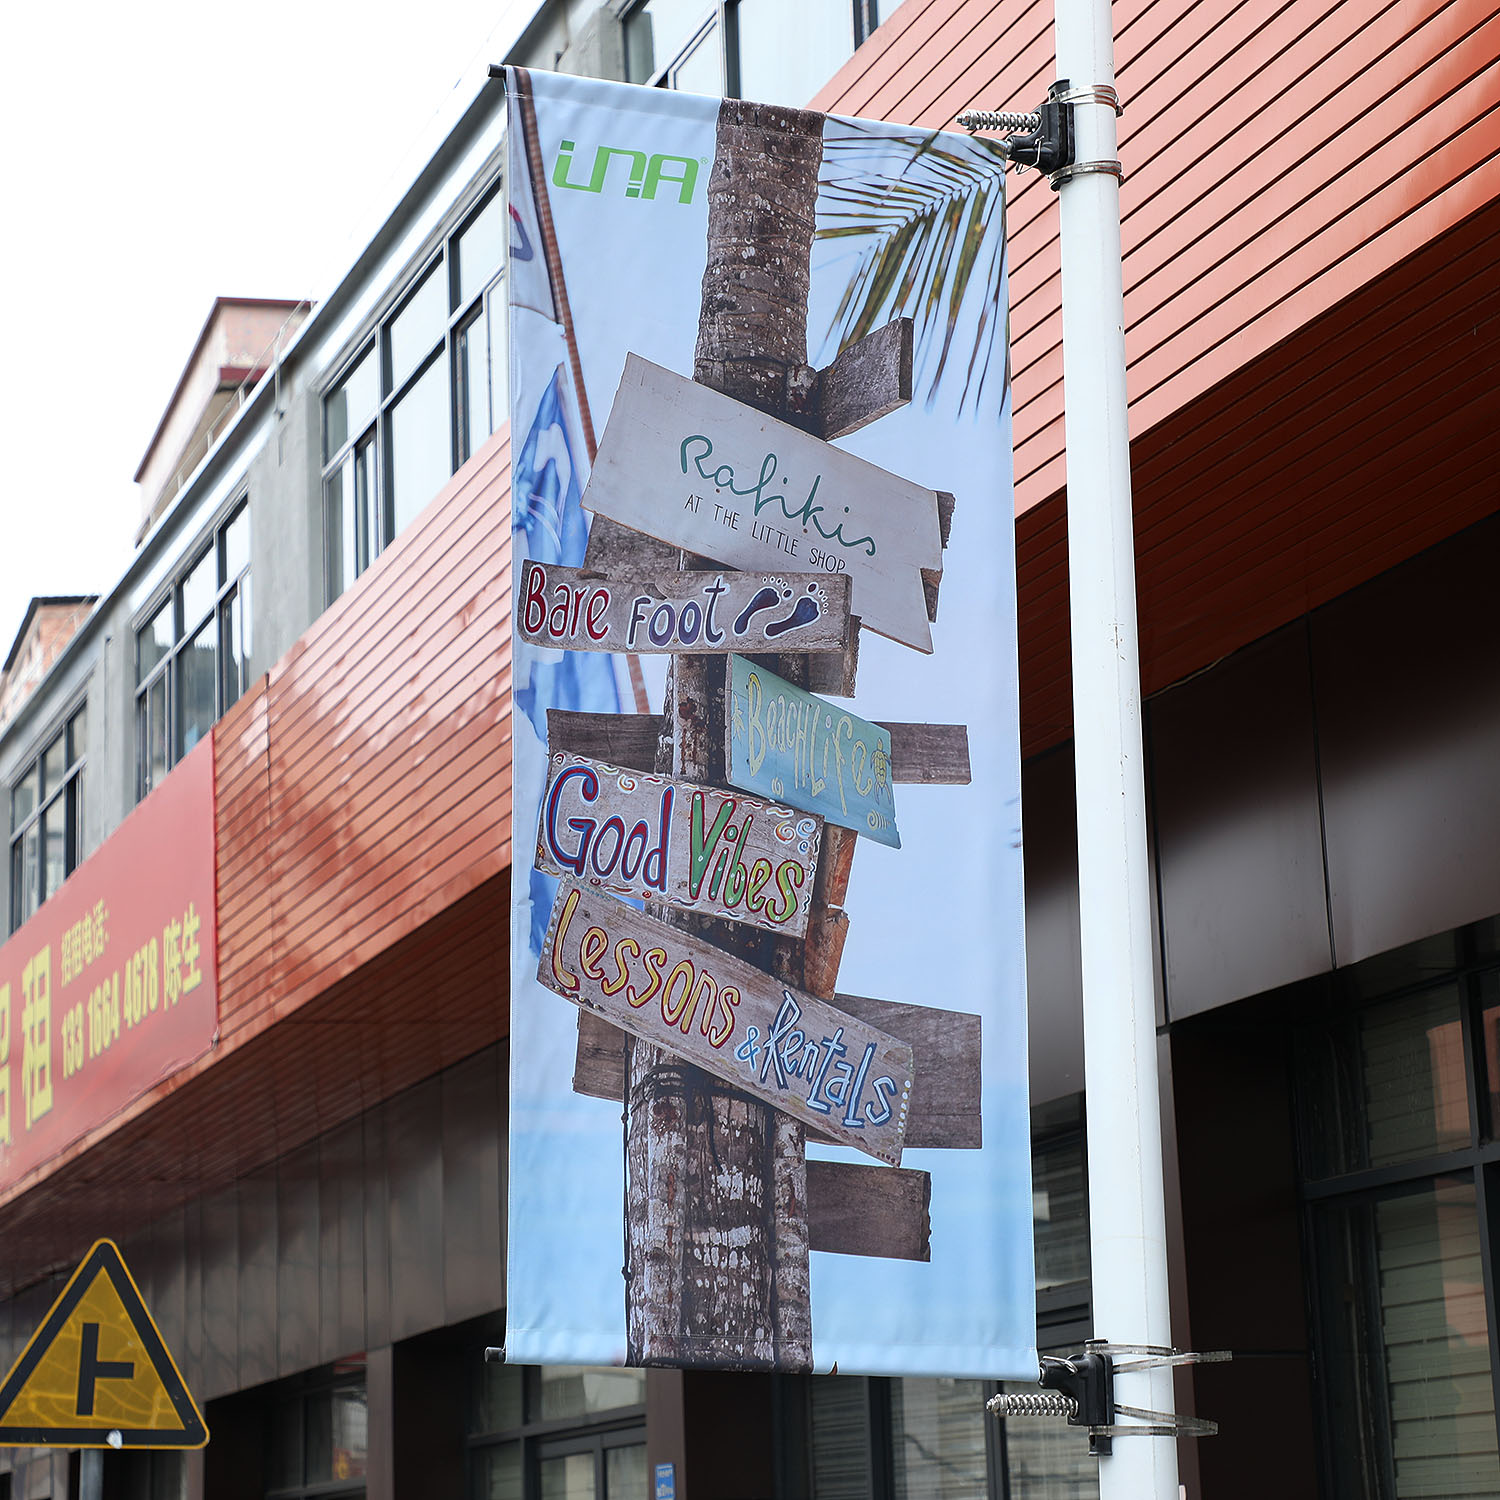 Colgador de pancartas de poste publicitario de un solo lado con pilar de alumbrado público